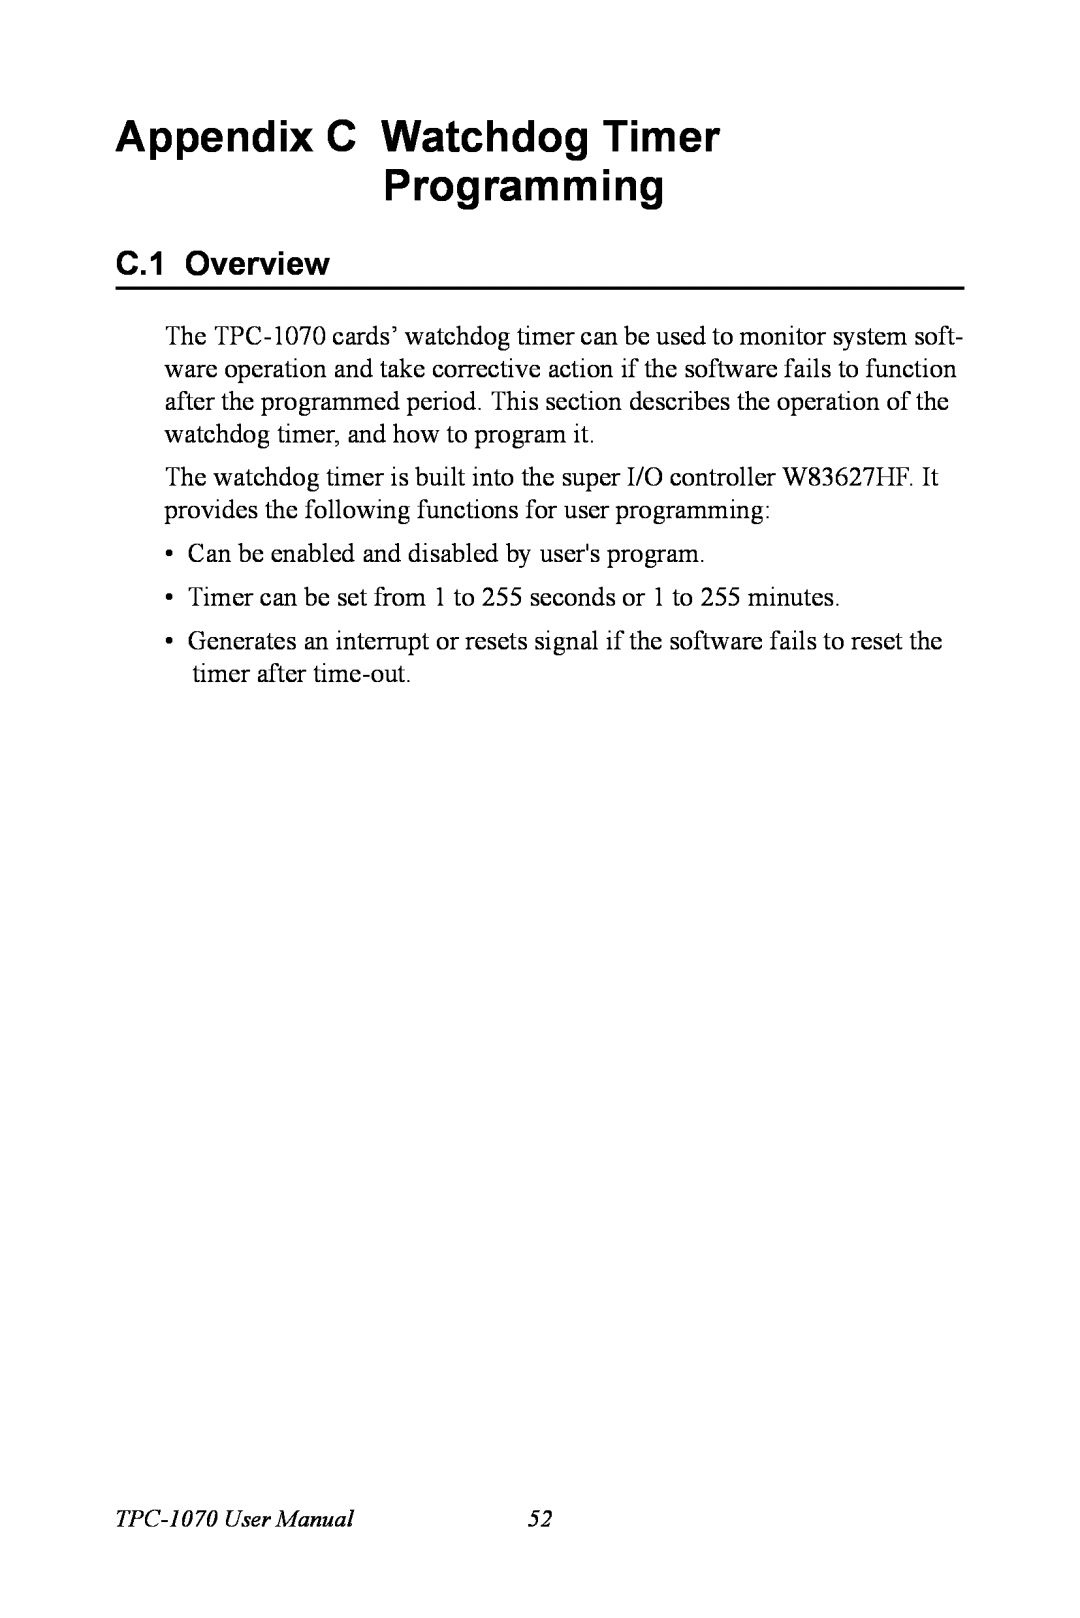 Intel TPC-1070 user manual Appendix C Watchdog Timer Programming, C.1 Overview 